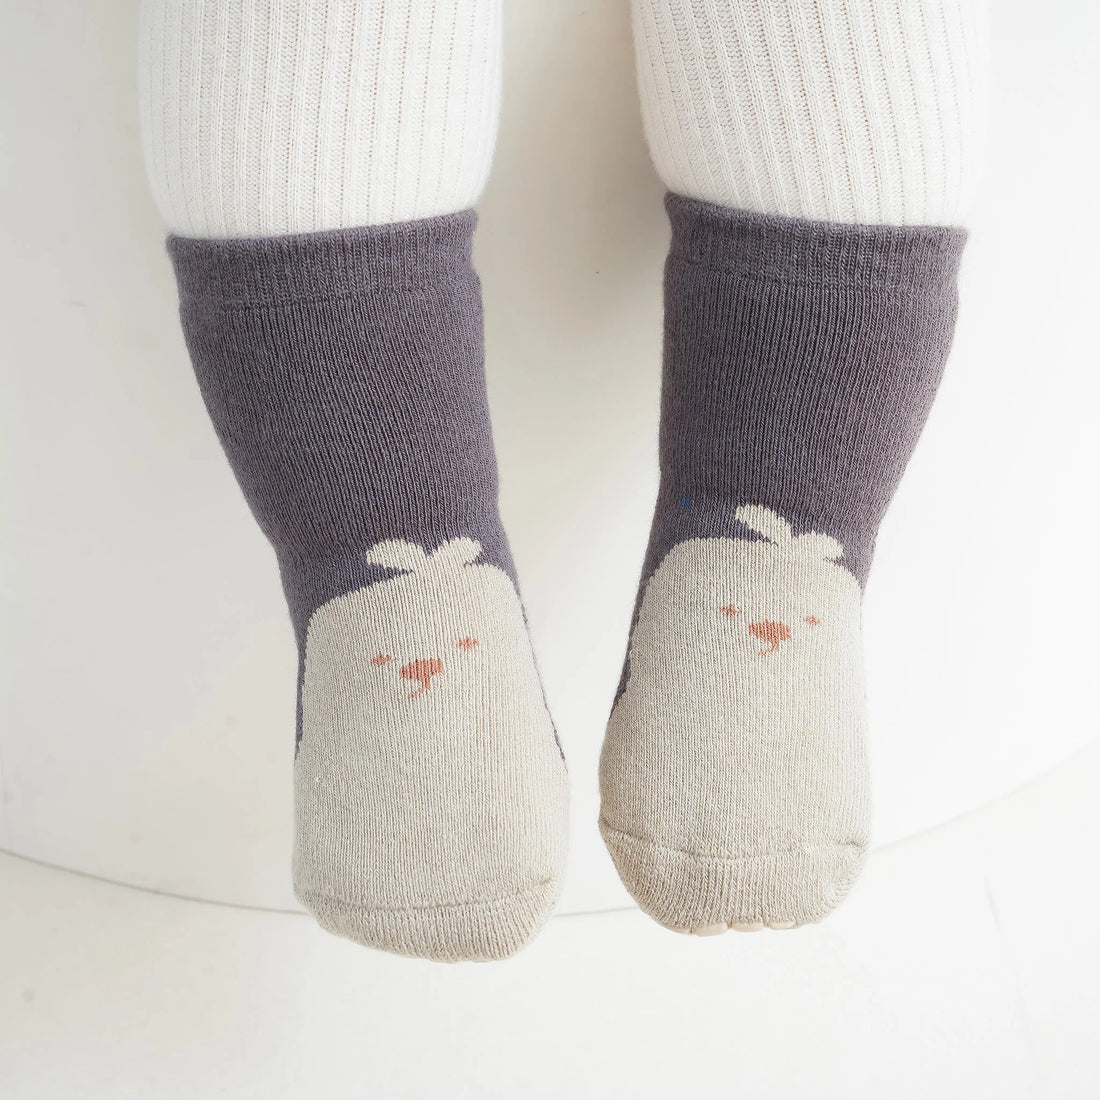 How do you shrink grip socks?